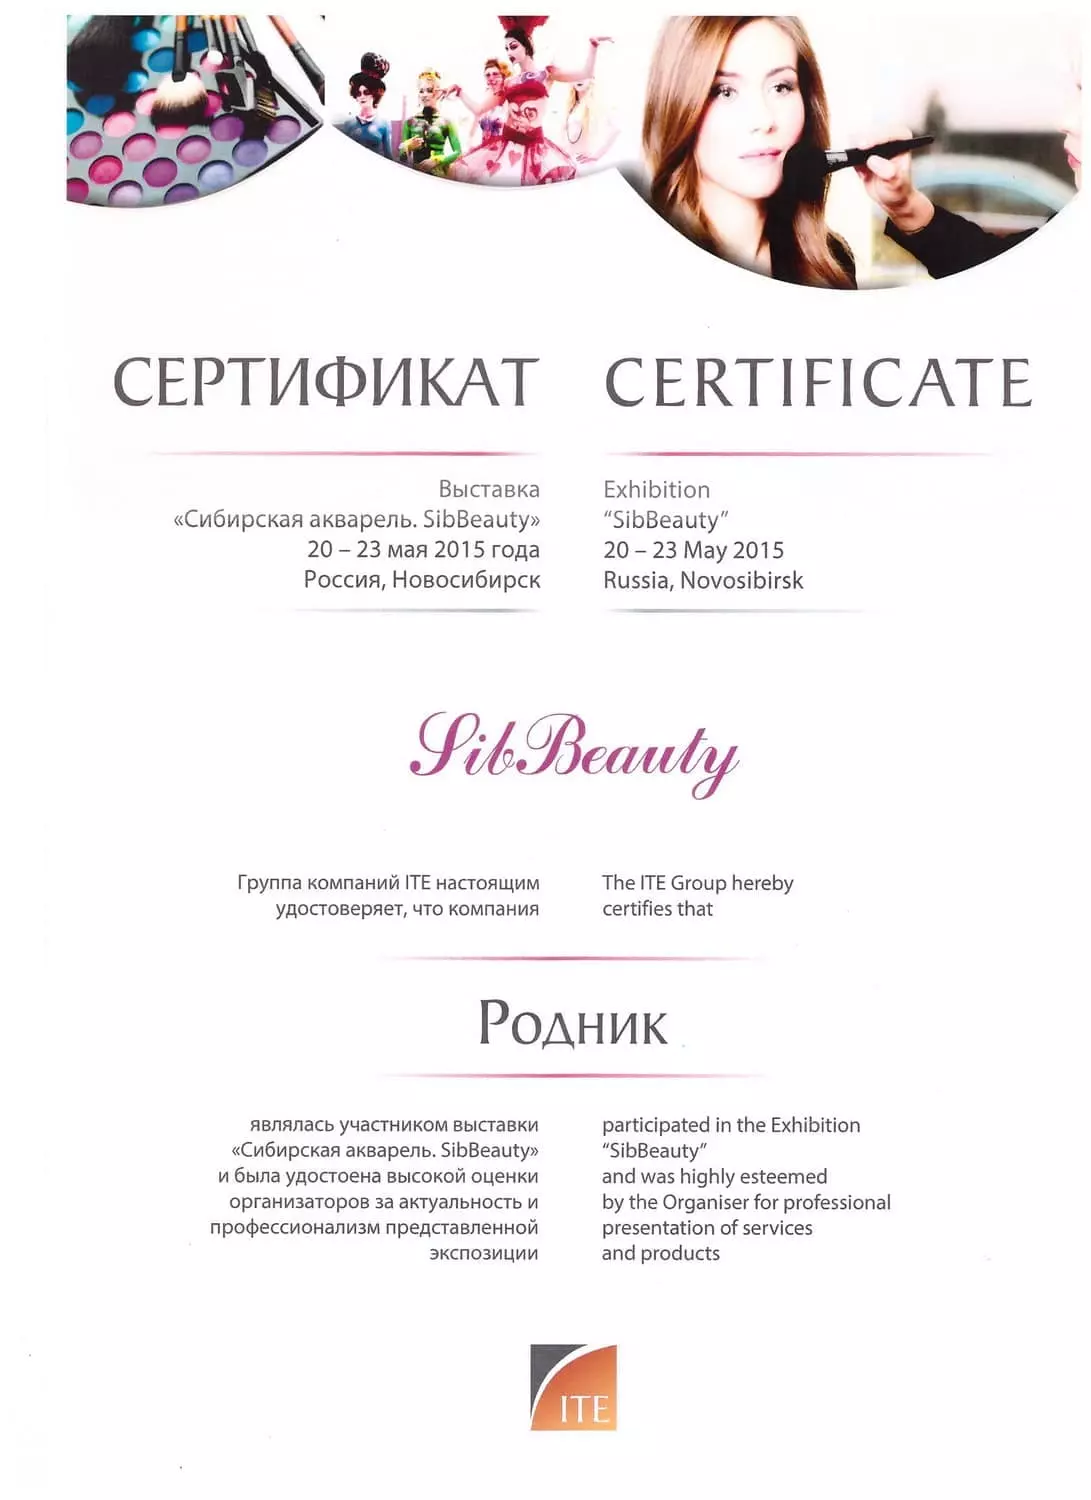 Сертификат лауреата выставки «SibBeauty» г. Новосибирск